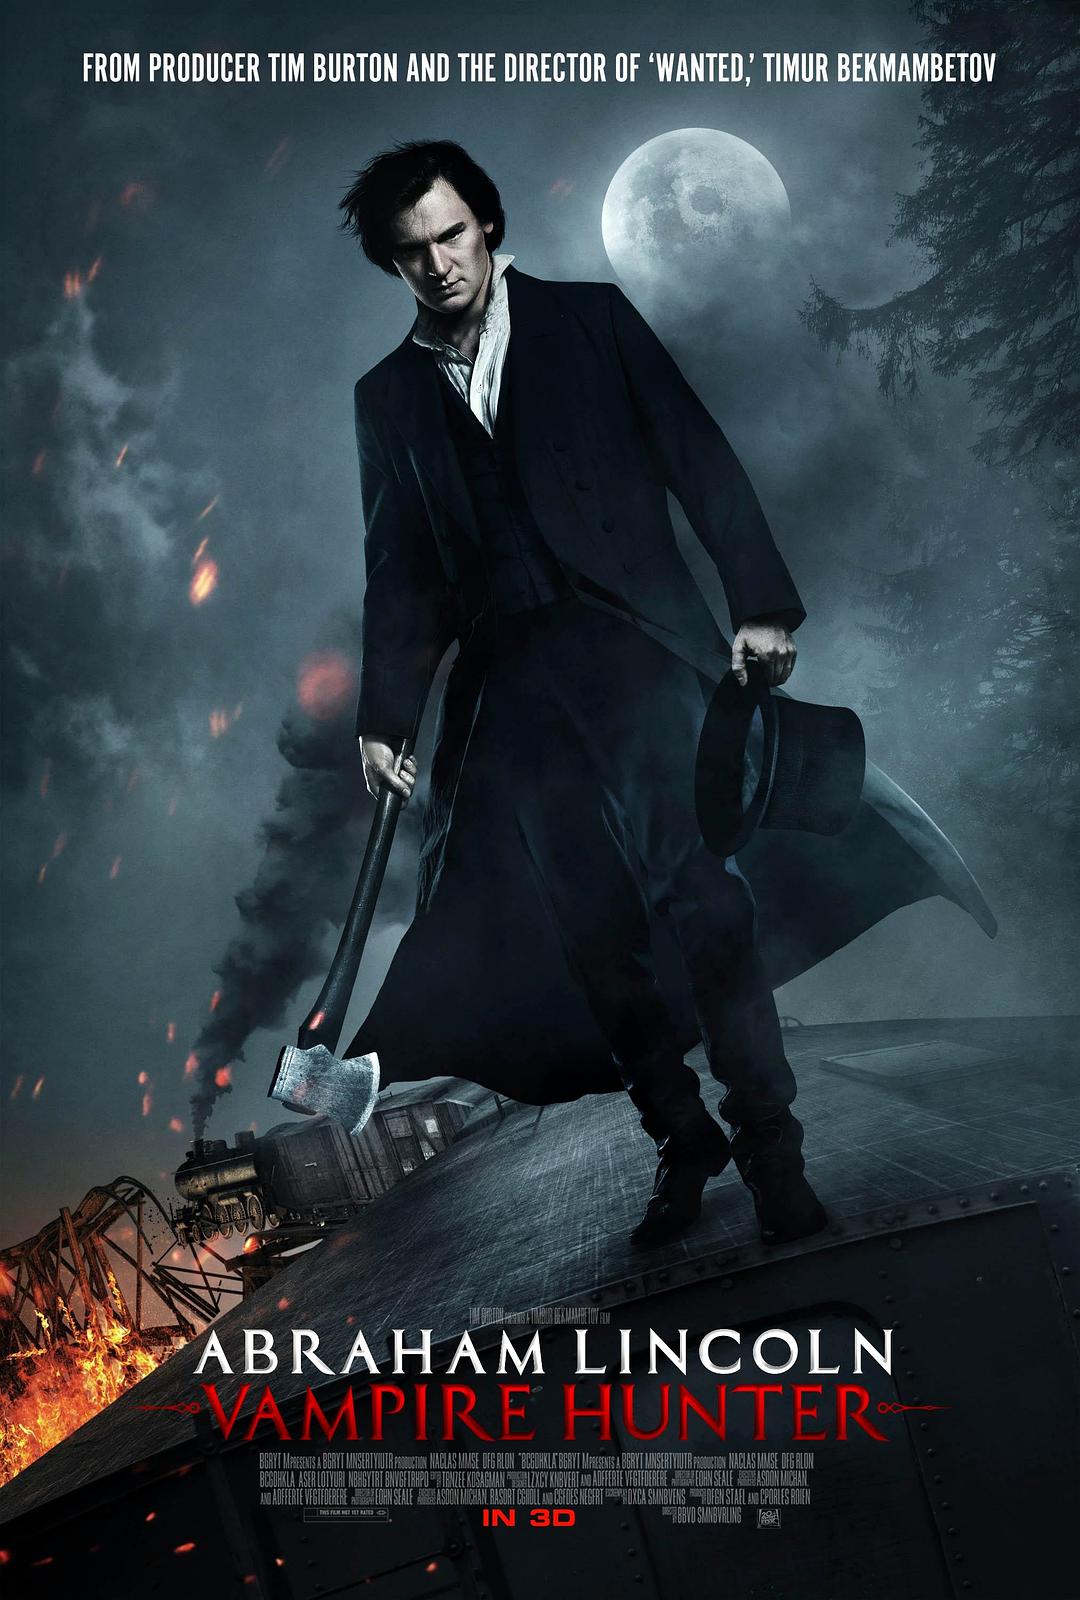 吸血鬼猎人林肯[DIY简繁双语特效字幕] Abraham Lincoln Vampire Hunter 2012 Blu-ray 1080p AVC DTS-HD MA7.1-Blues@OurBits [43.16 GB ]-1.jpg